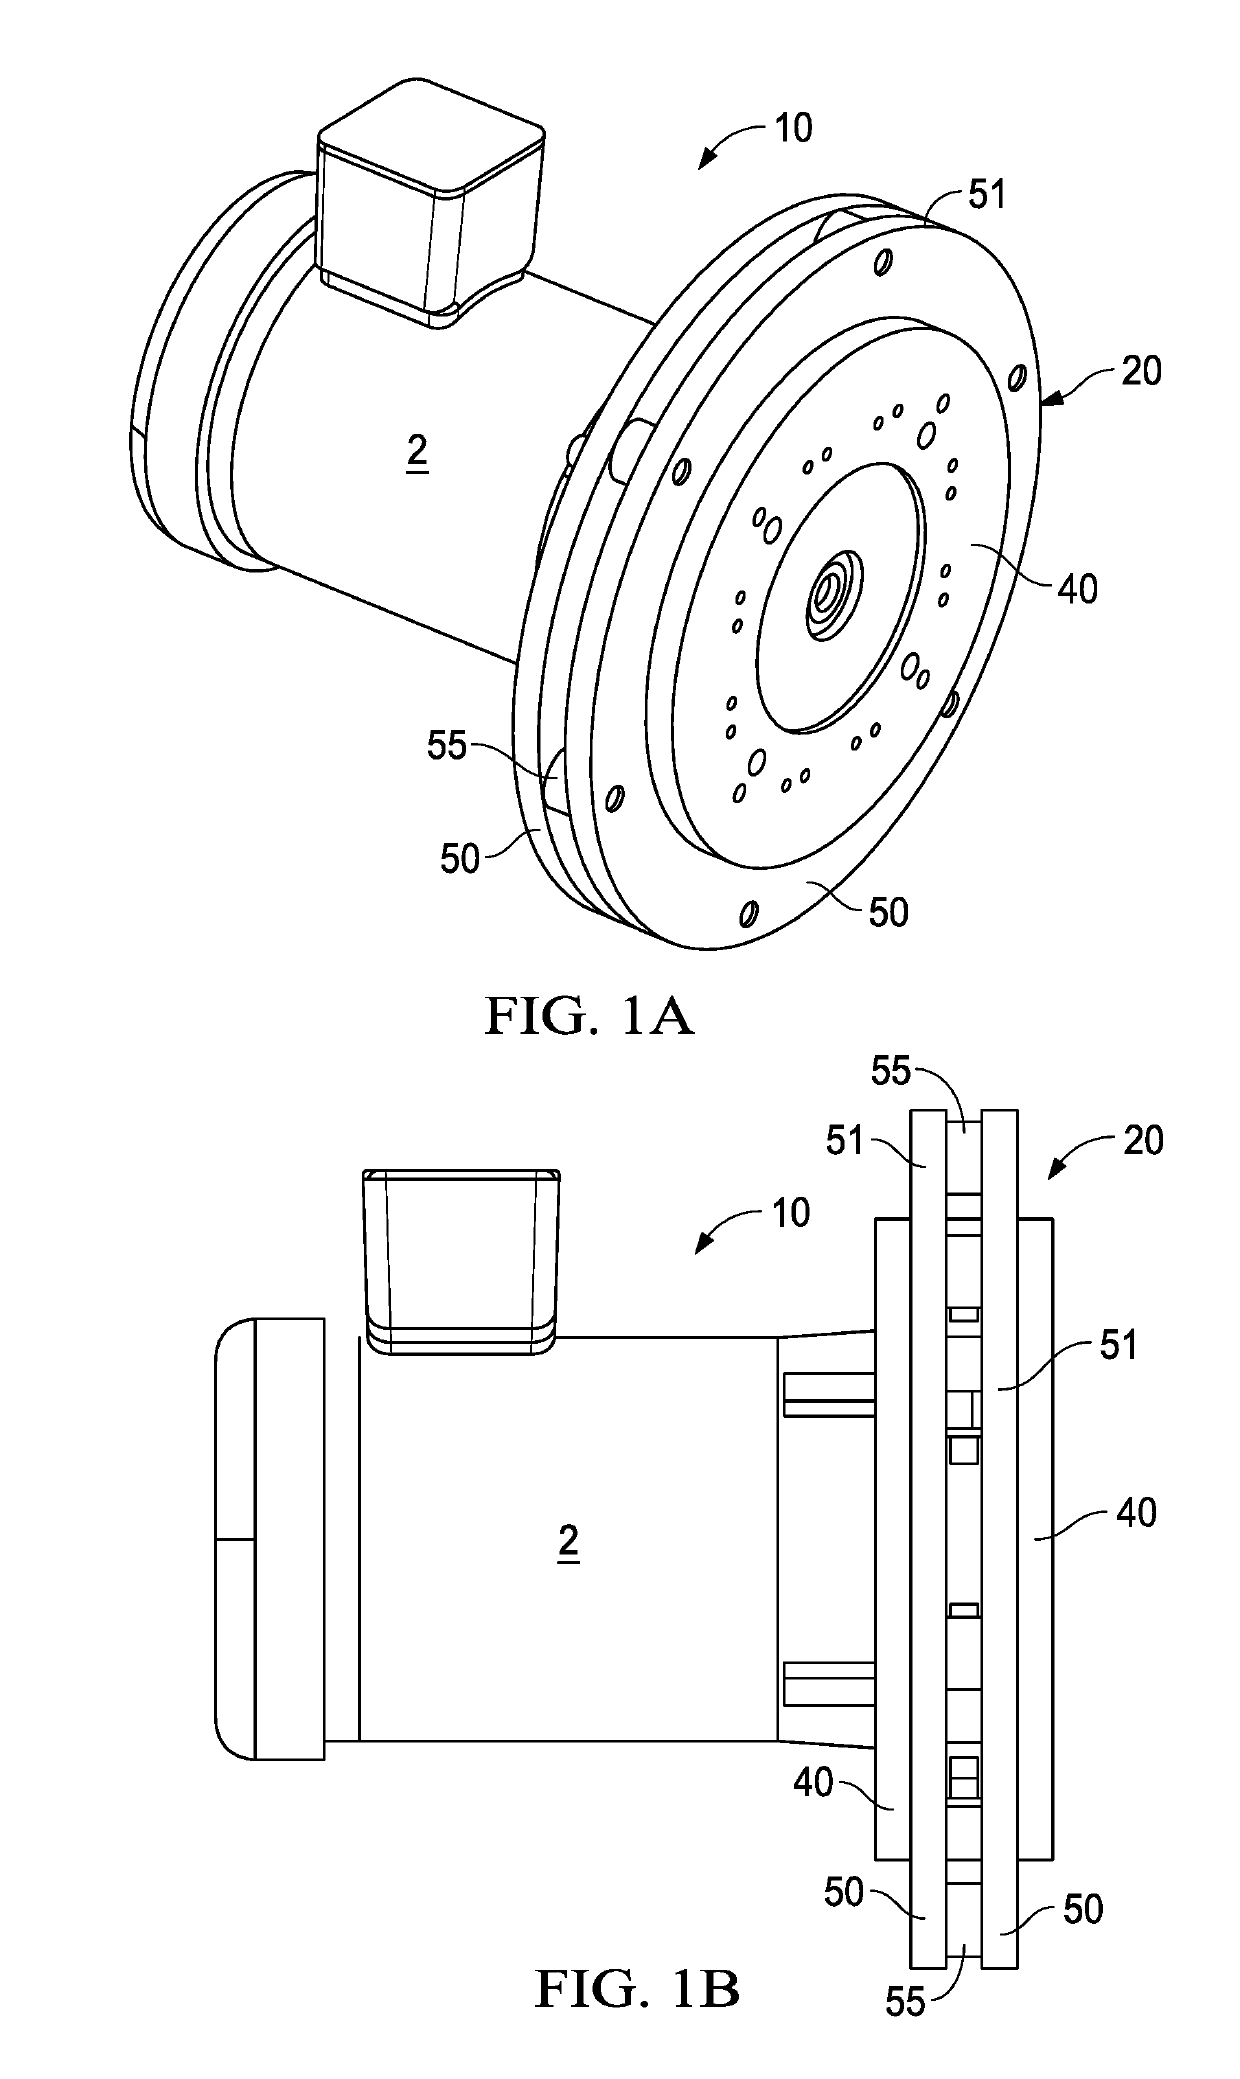 Simplified gearbox mechanism